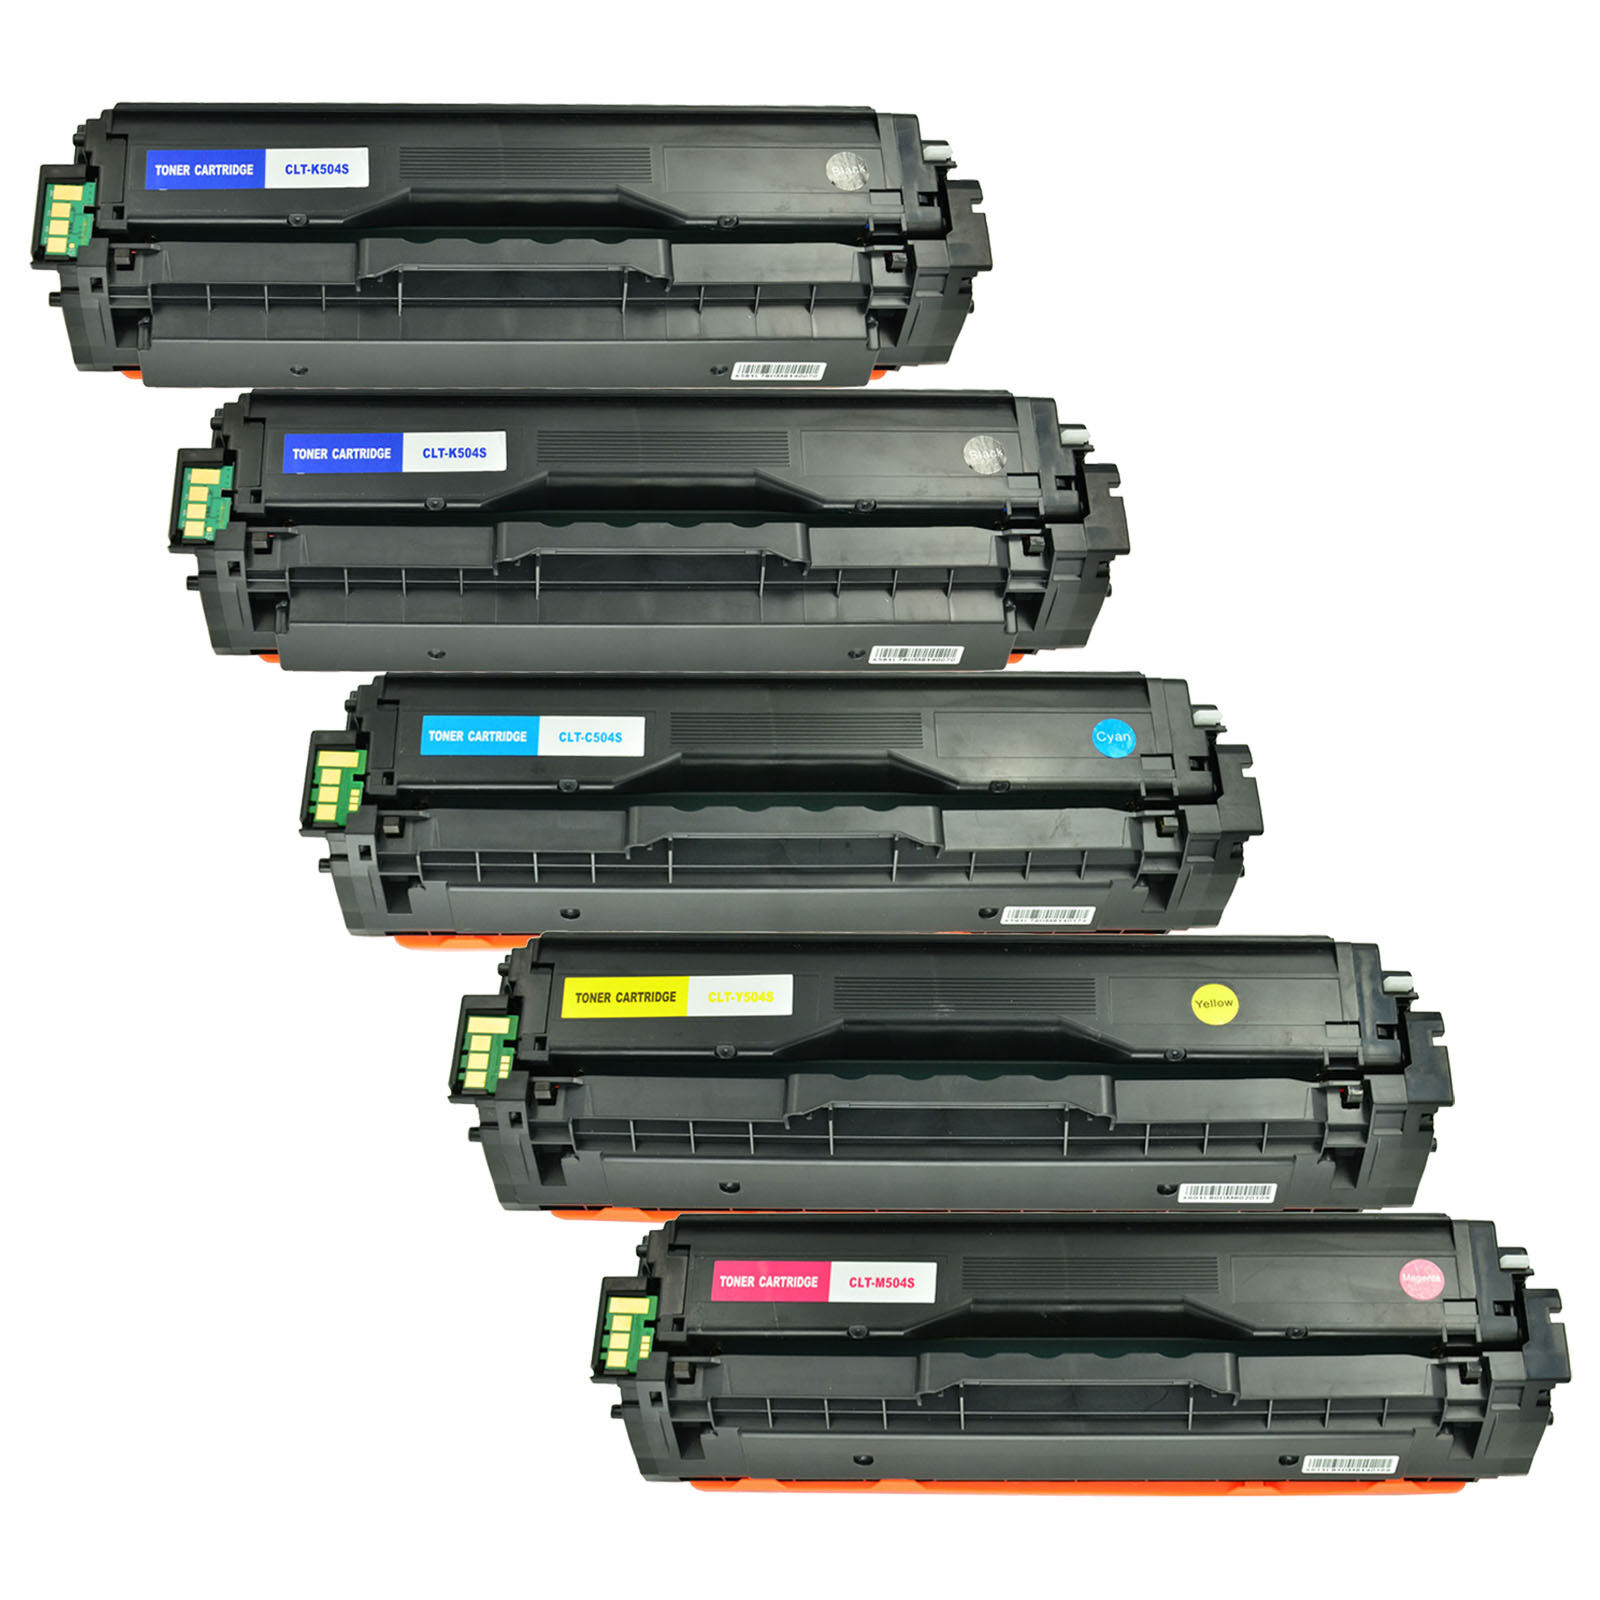 5 CLT-K504S 504 SET Toner Cartridges for Samsung SL-C1810W SL-C1860FW CLX-4195FW